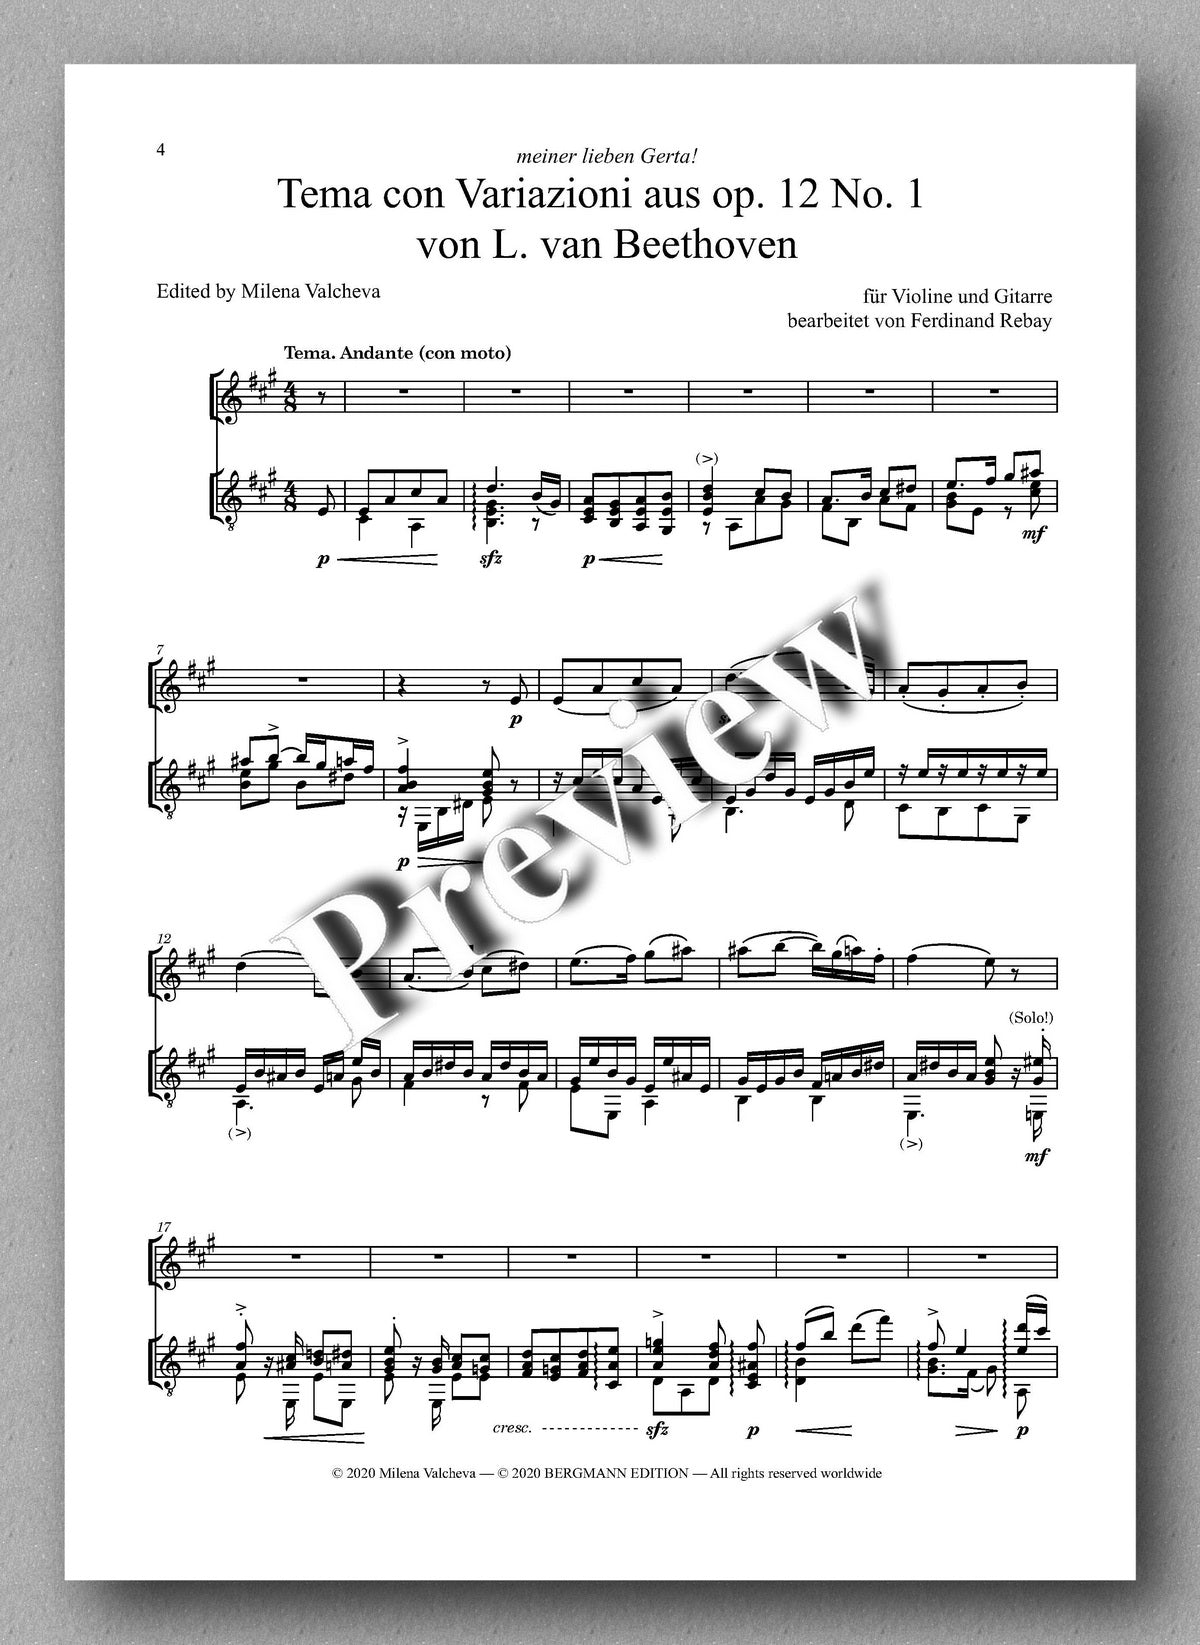 Rebay [155], Tema con Variazioni aus op. 12 No. 1 von L. van Beethoven - music score 1